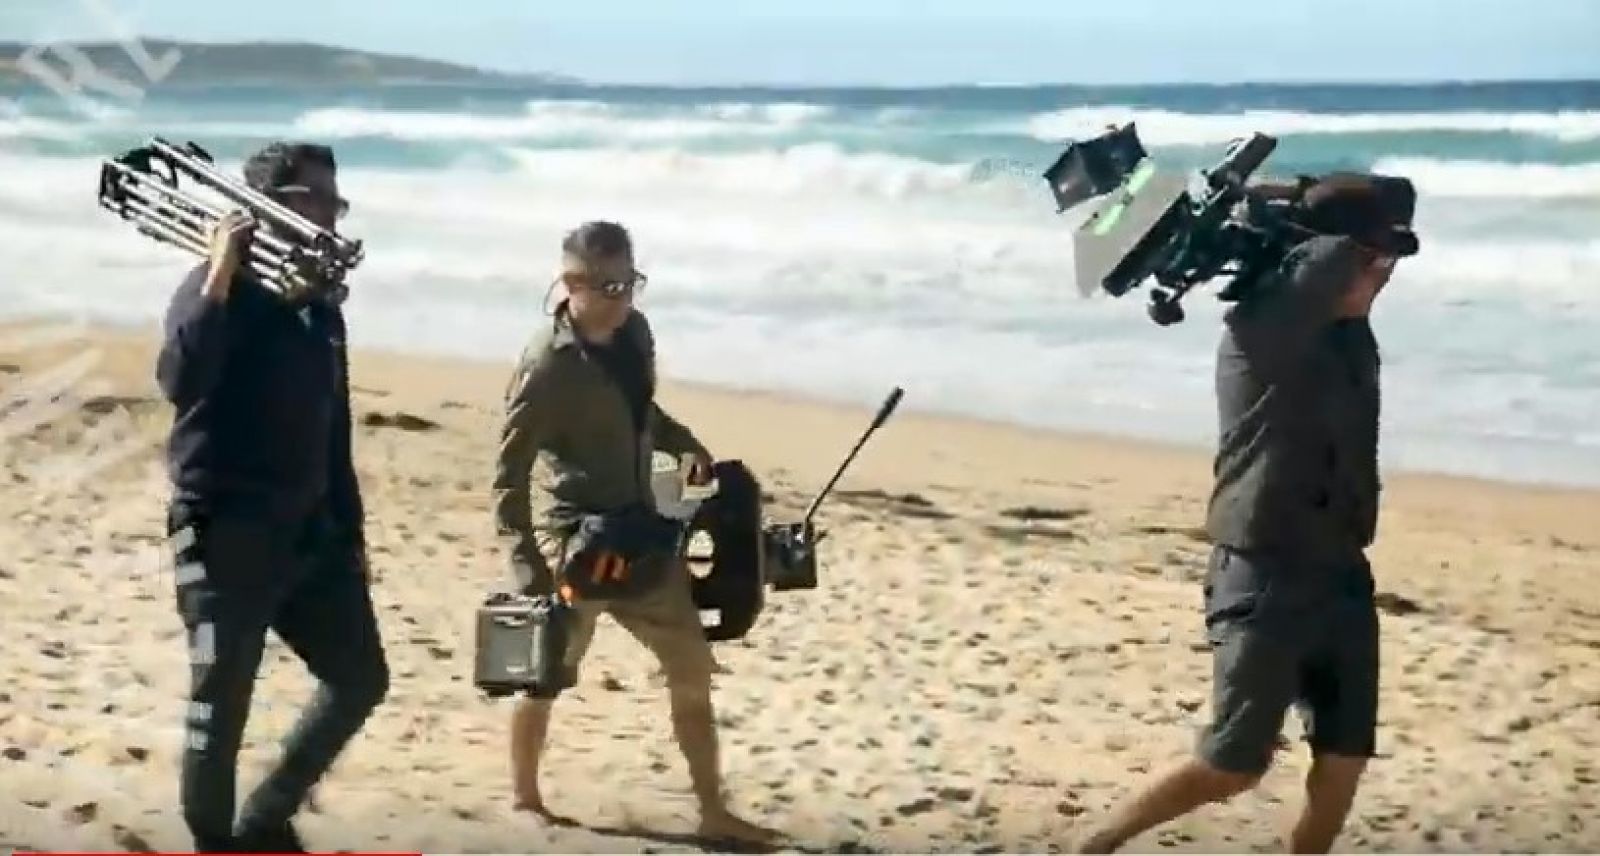 Filming crew